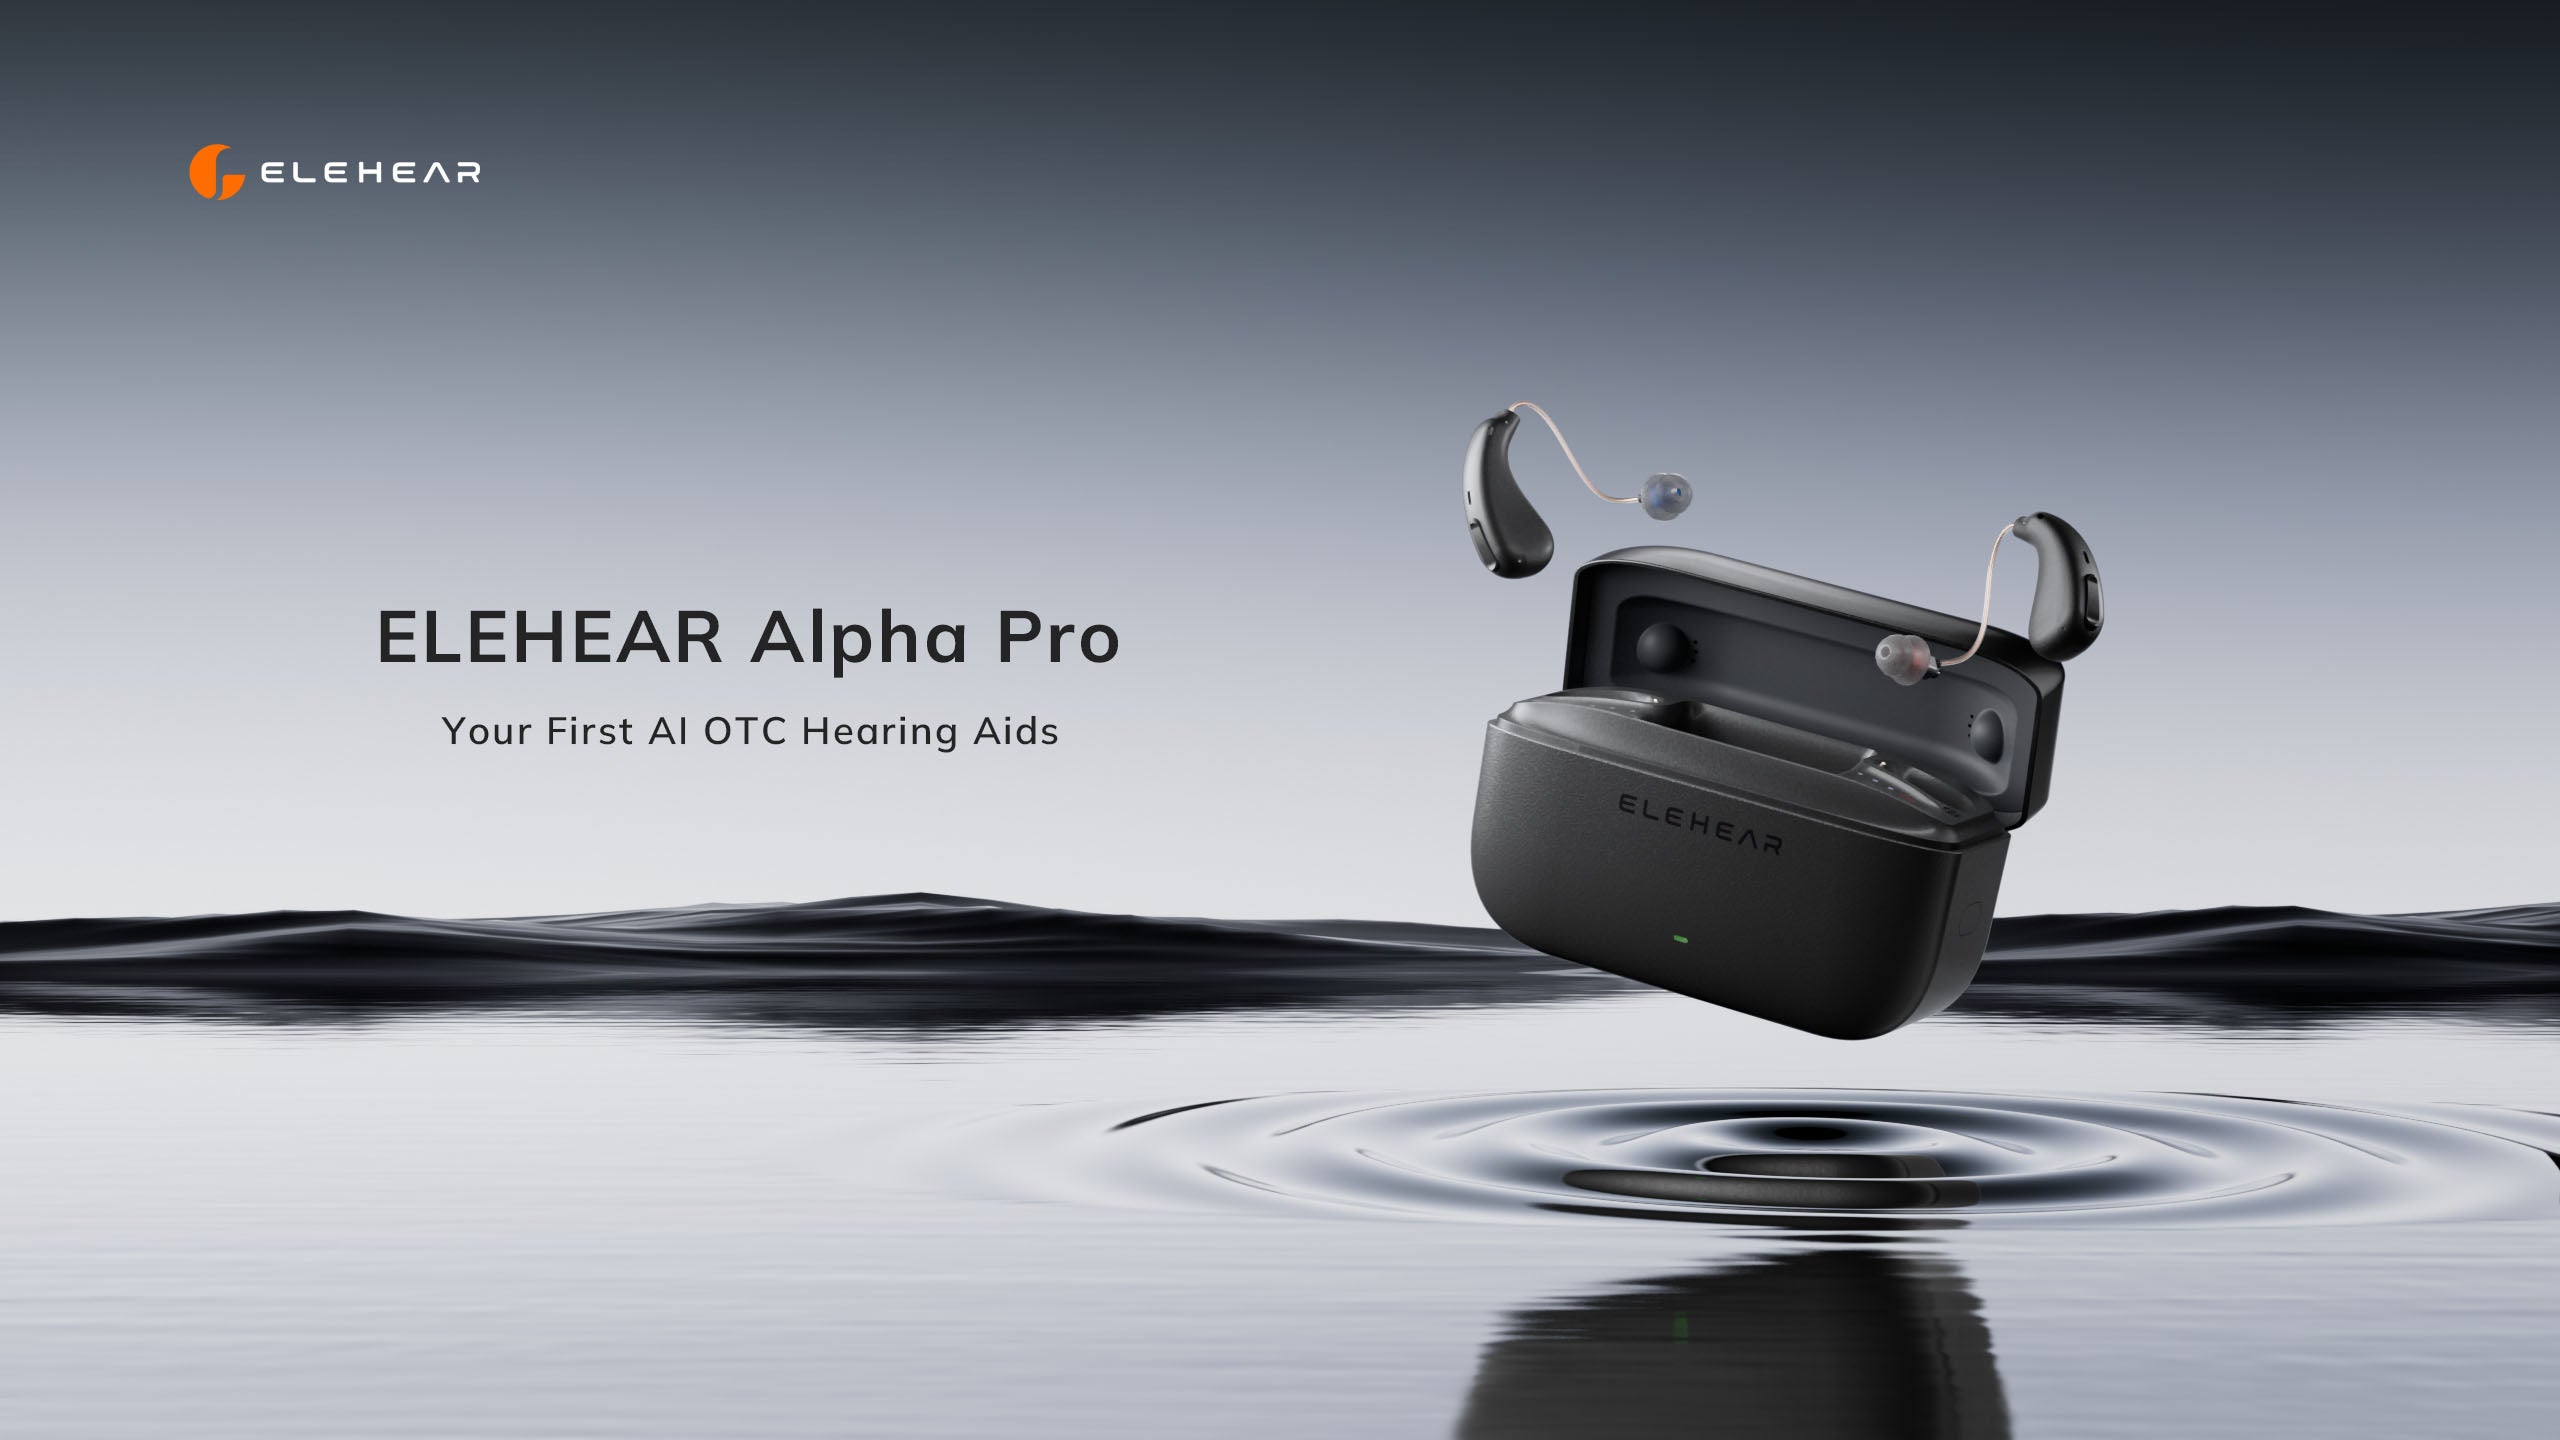 Meet ELEHEAR Alpha Pro, your first AI OTC hearing aids.